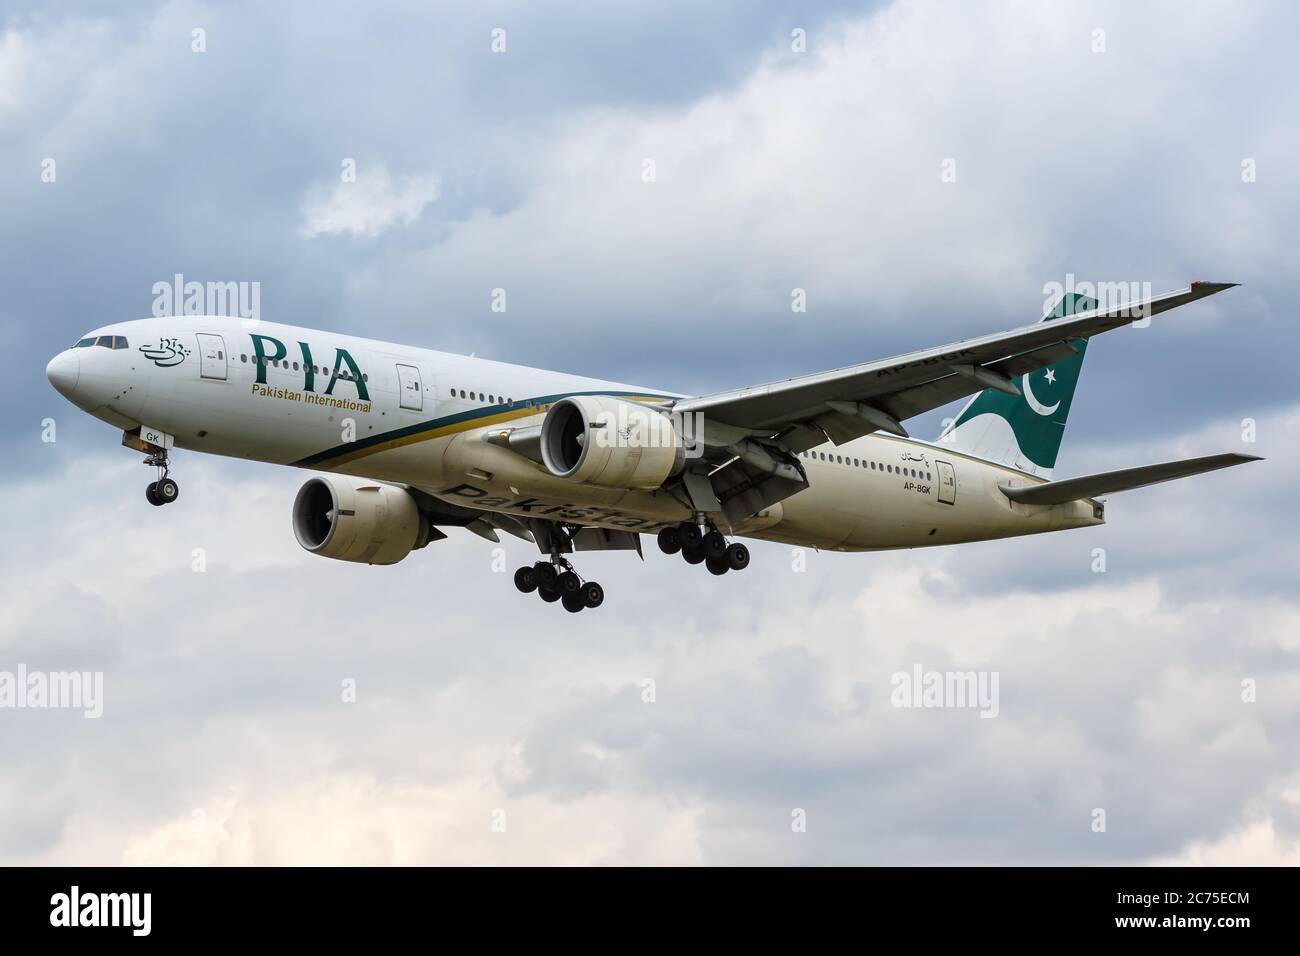 London, United Kingdom - July 10, 2019: PIA Pakistan International Boeing 777-200ER airplane London Heathrow airport (LHR) in the United Kingdom. Stock Photo